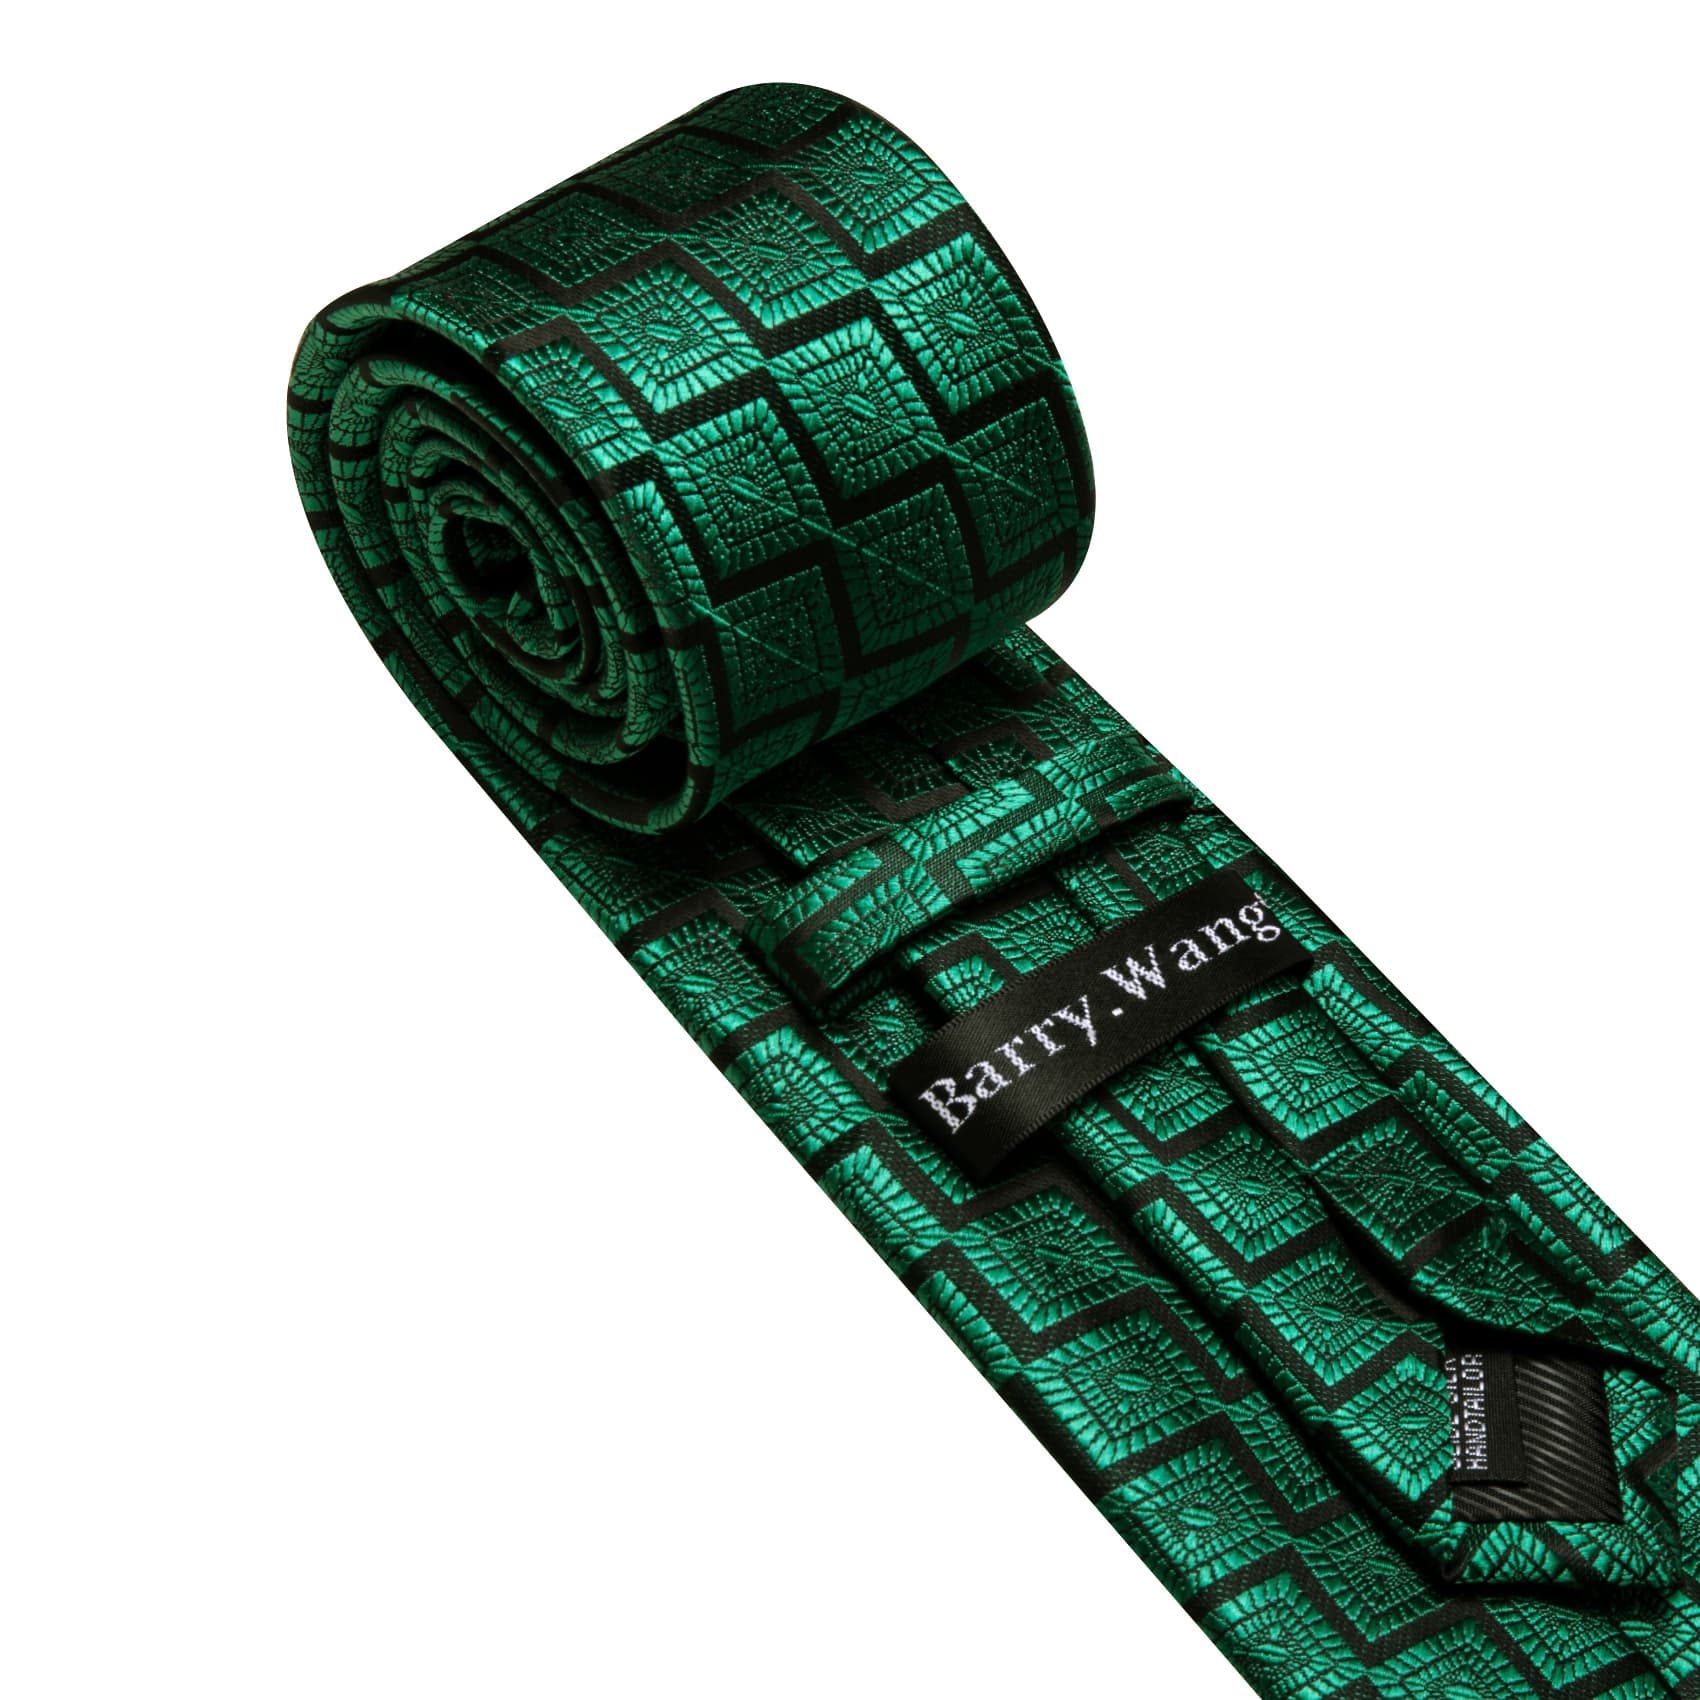  Emerald Green Tie Jacquard Geometric Men's Necktie Set